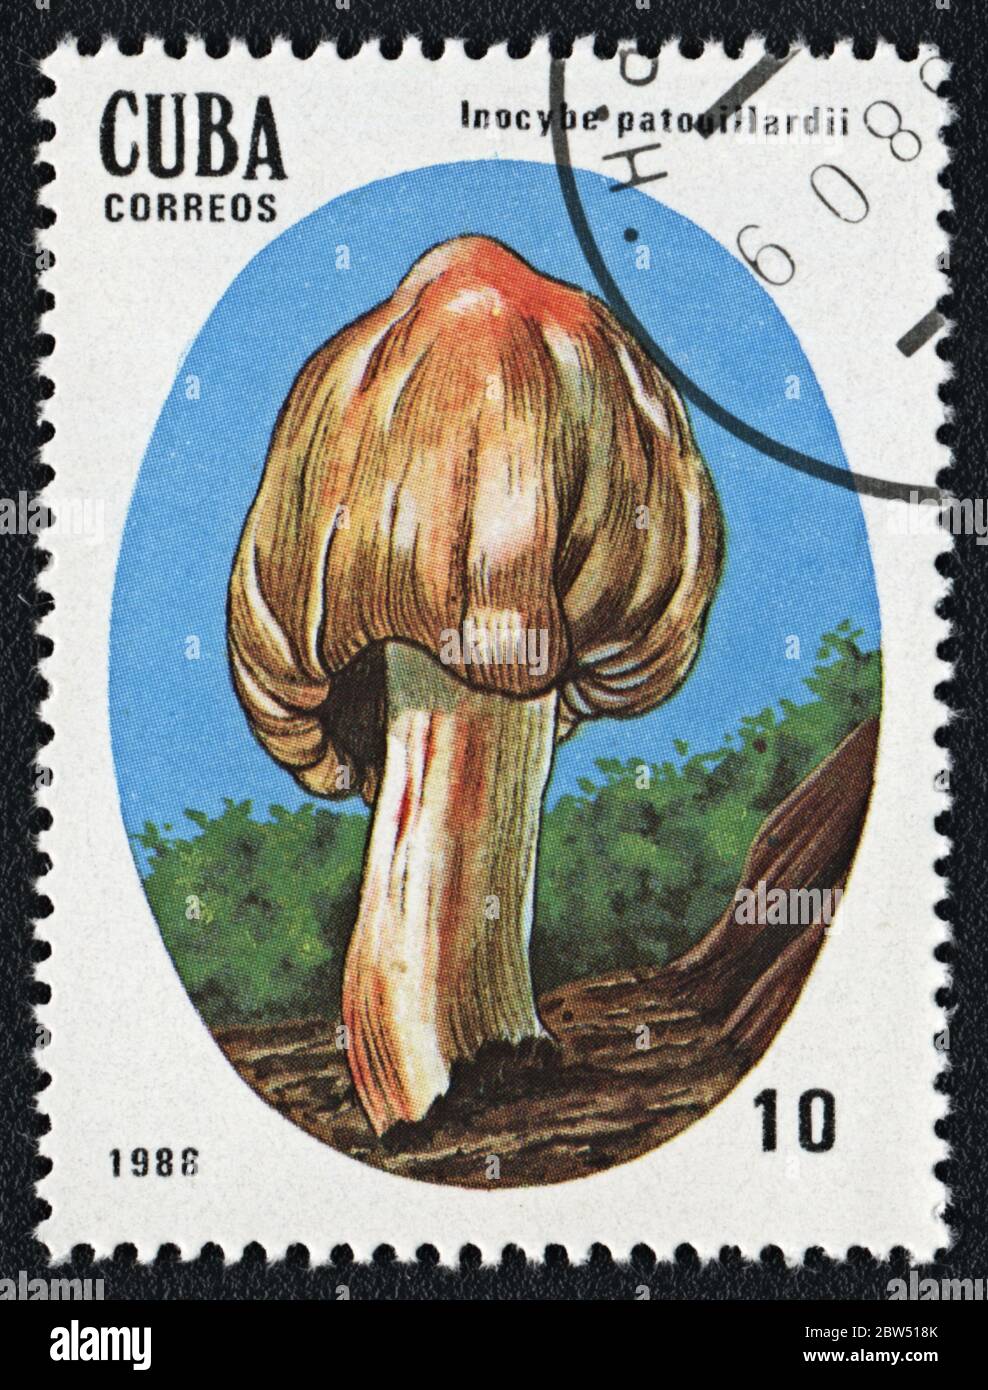 Inocybe patouillardii oder Inocybe erubescens giftiger Pilz. Serie: Ungenießbare und giftige Pilze. Briefmarke Kuba 1988 Stockfoto